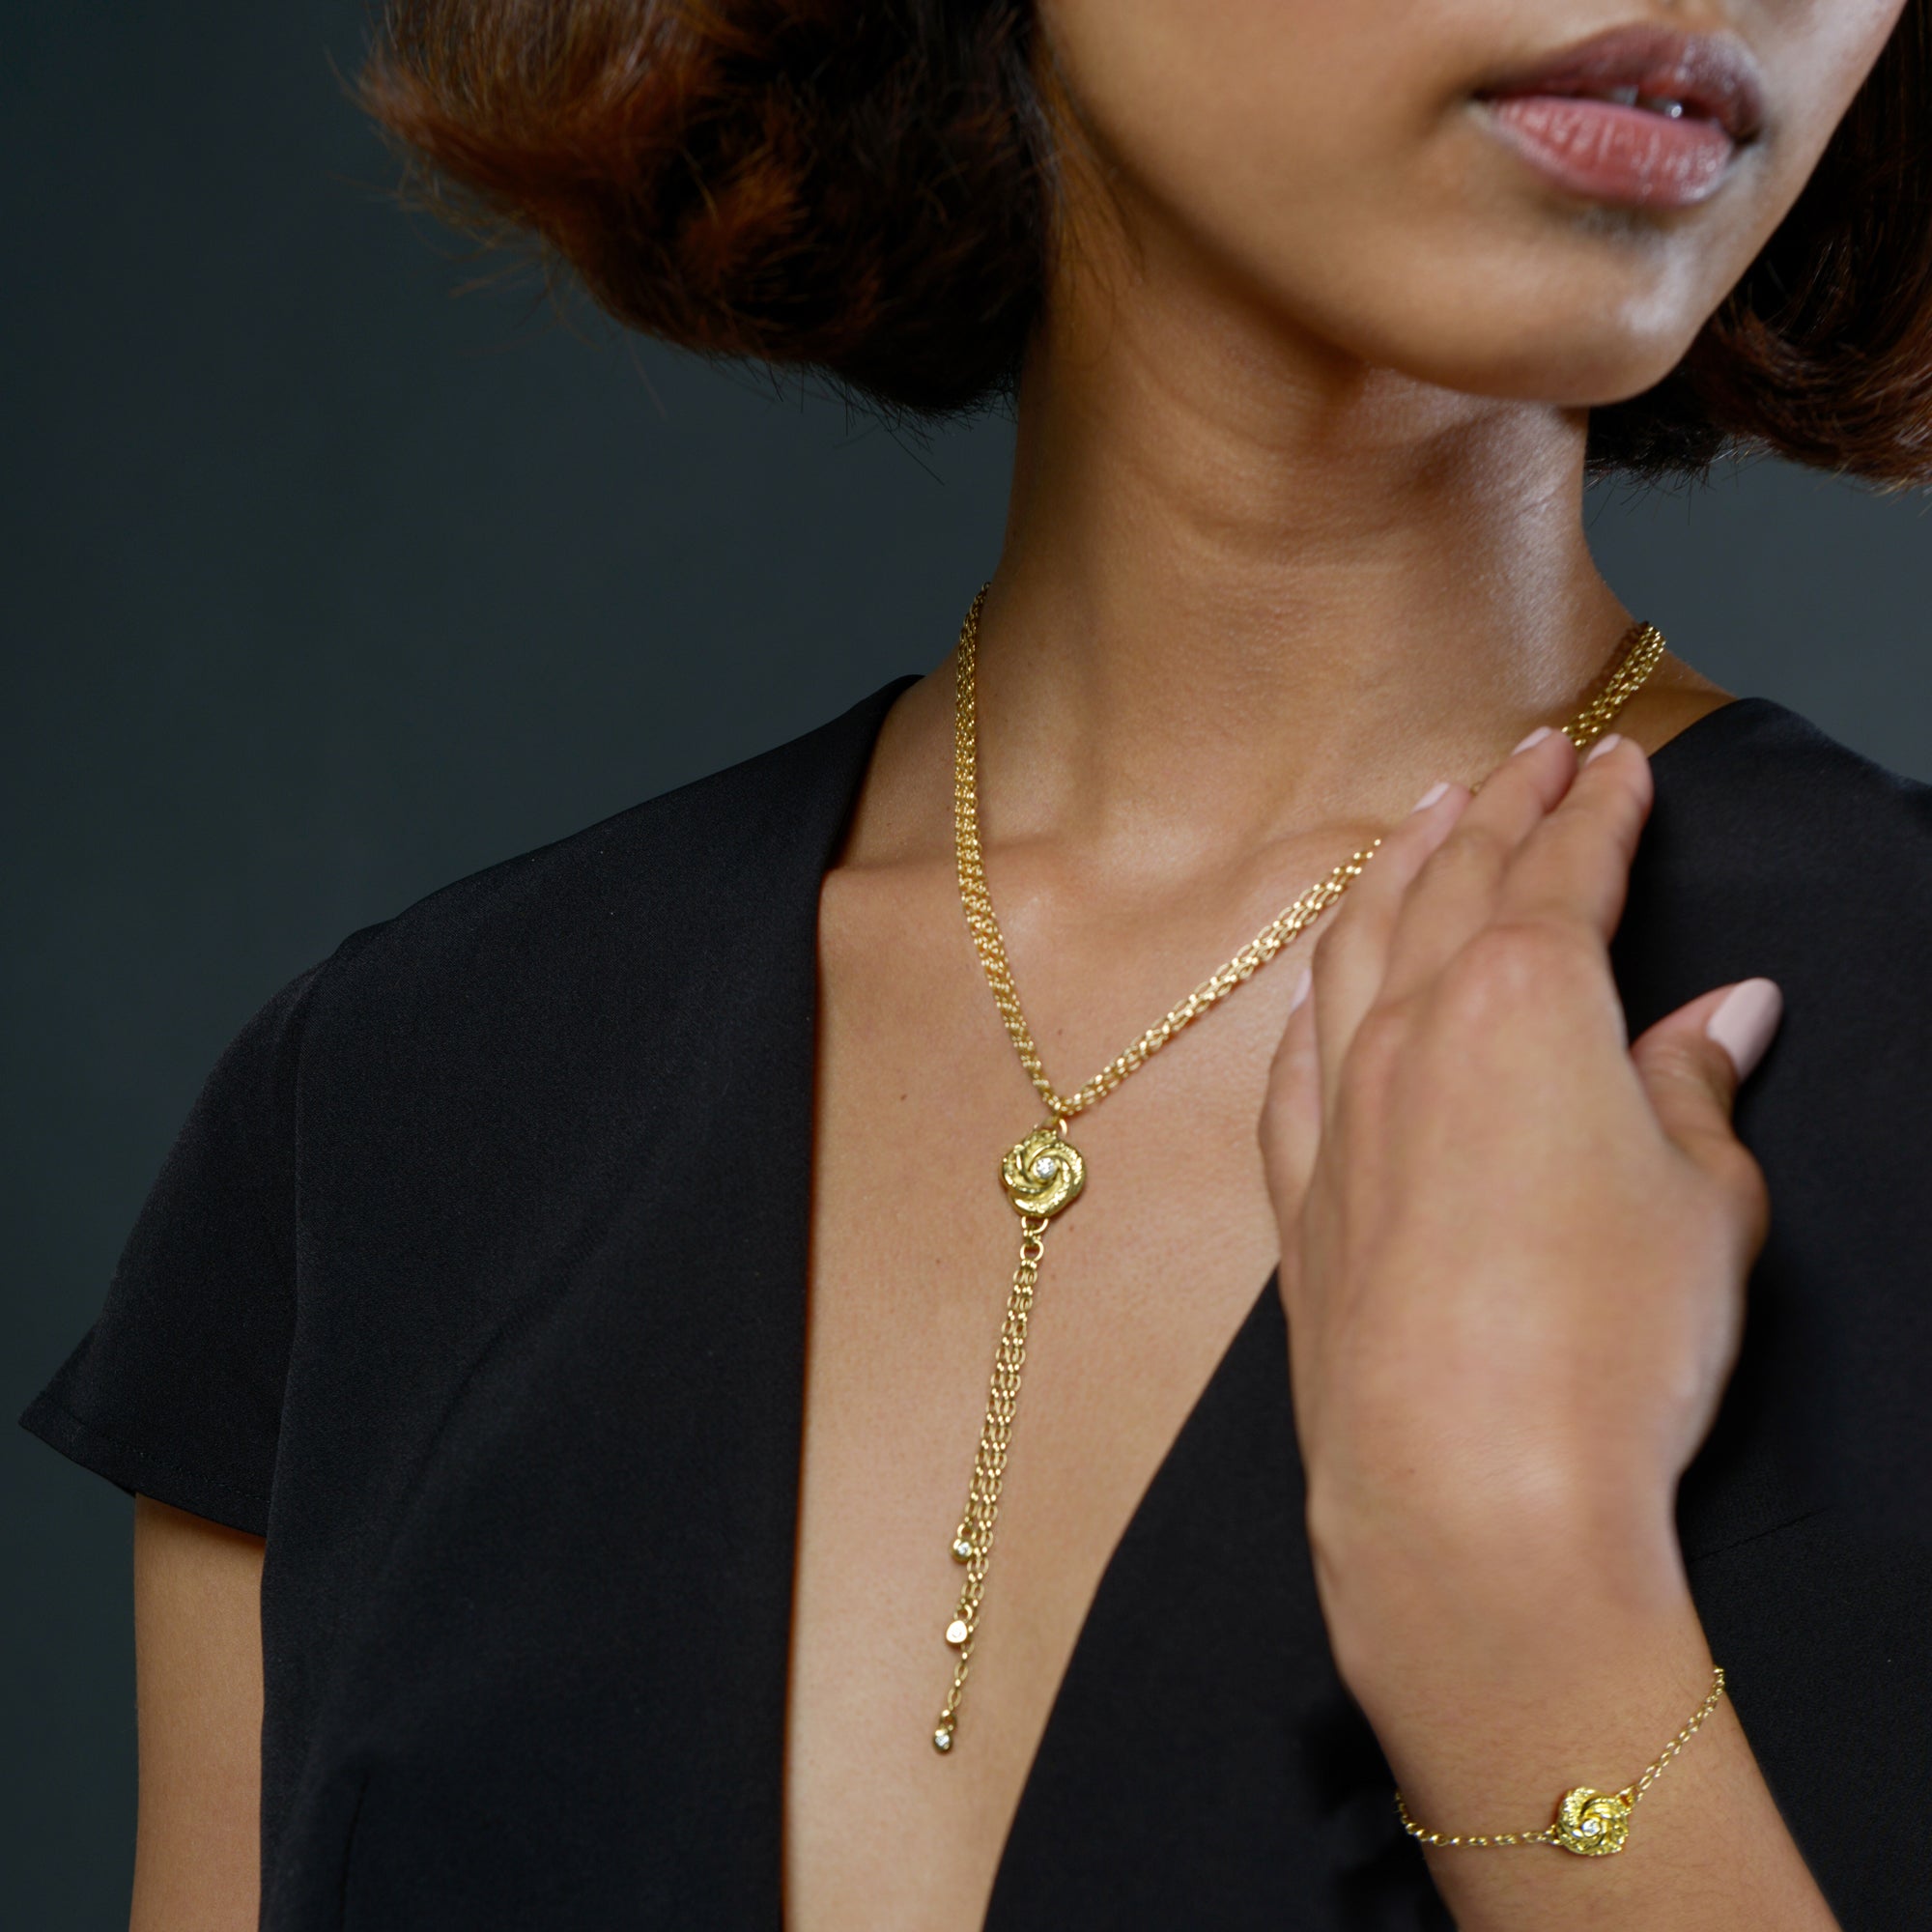 bond girl jewelry algerian love knot